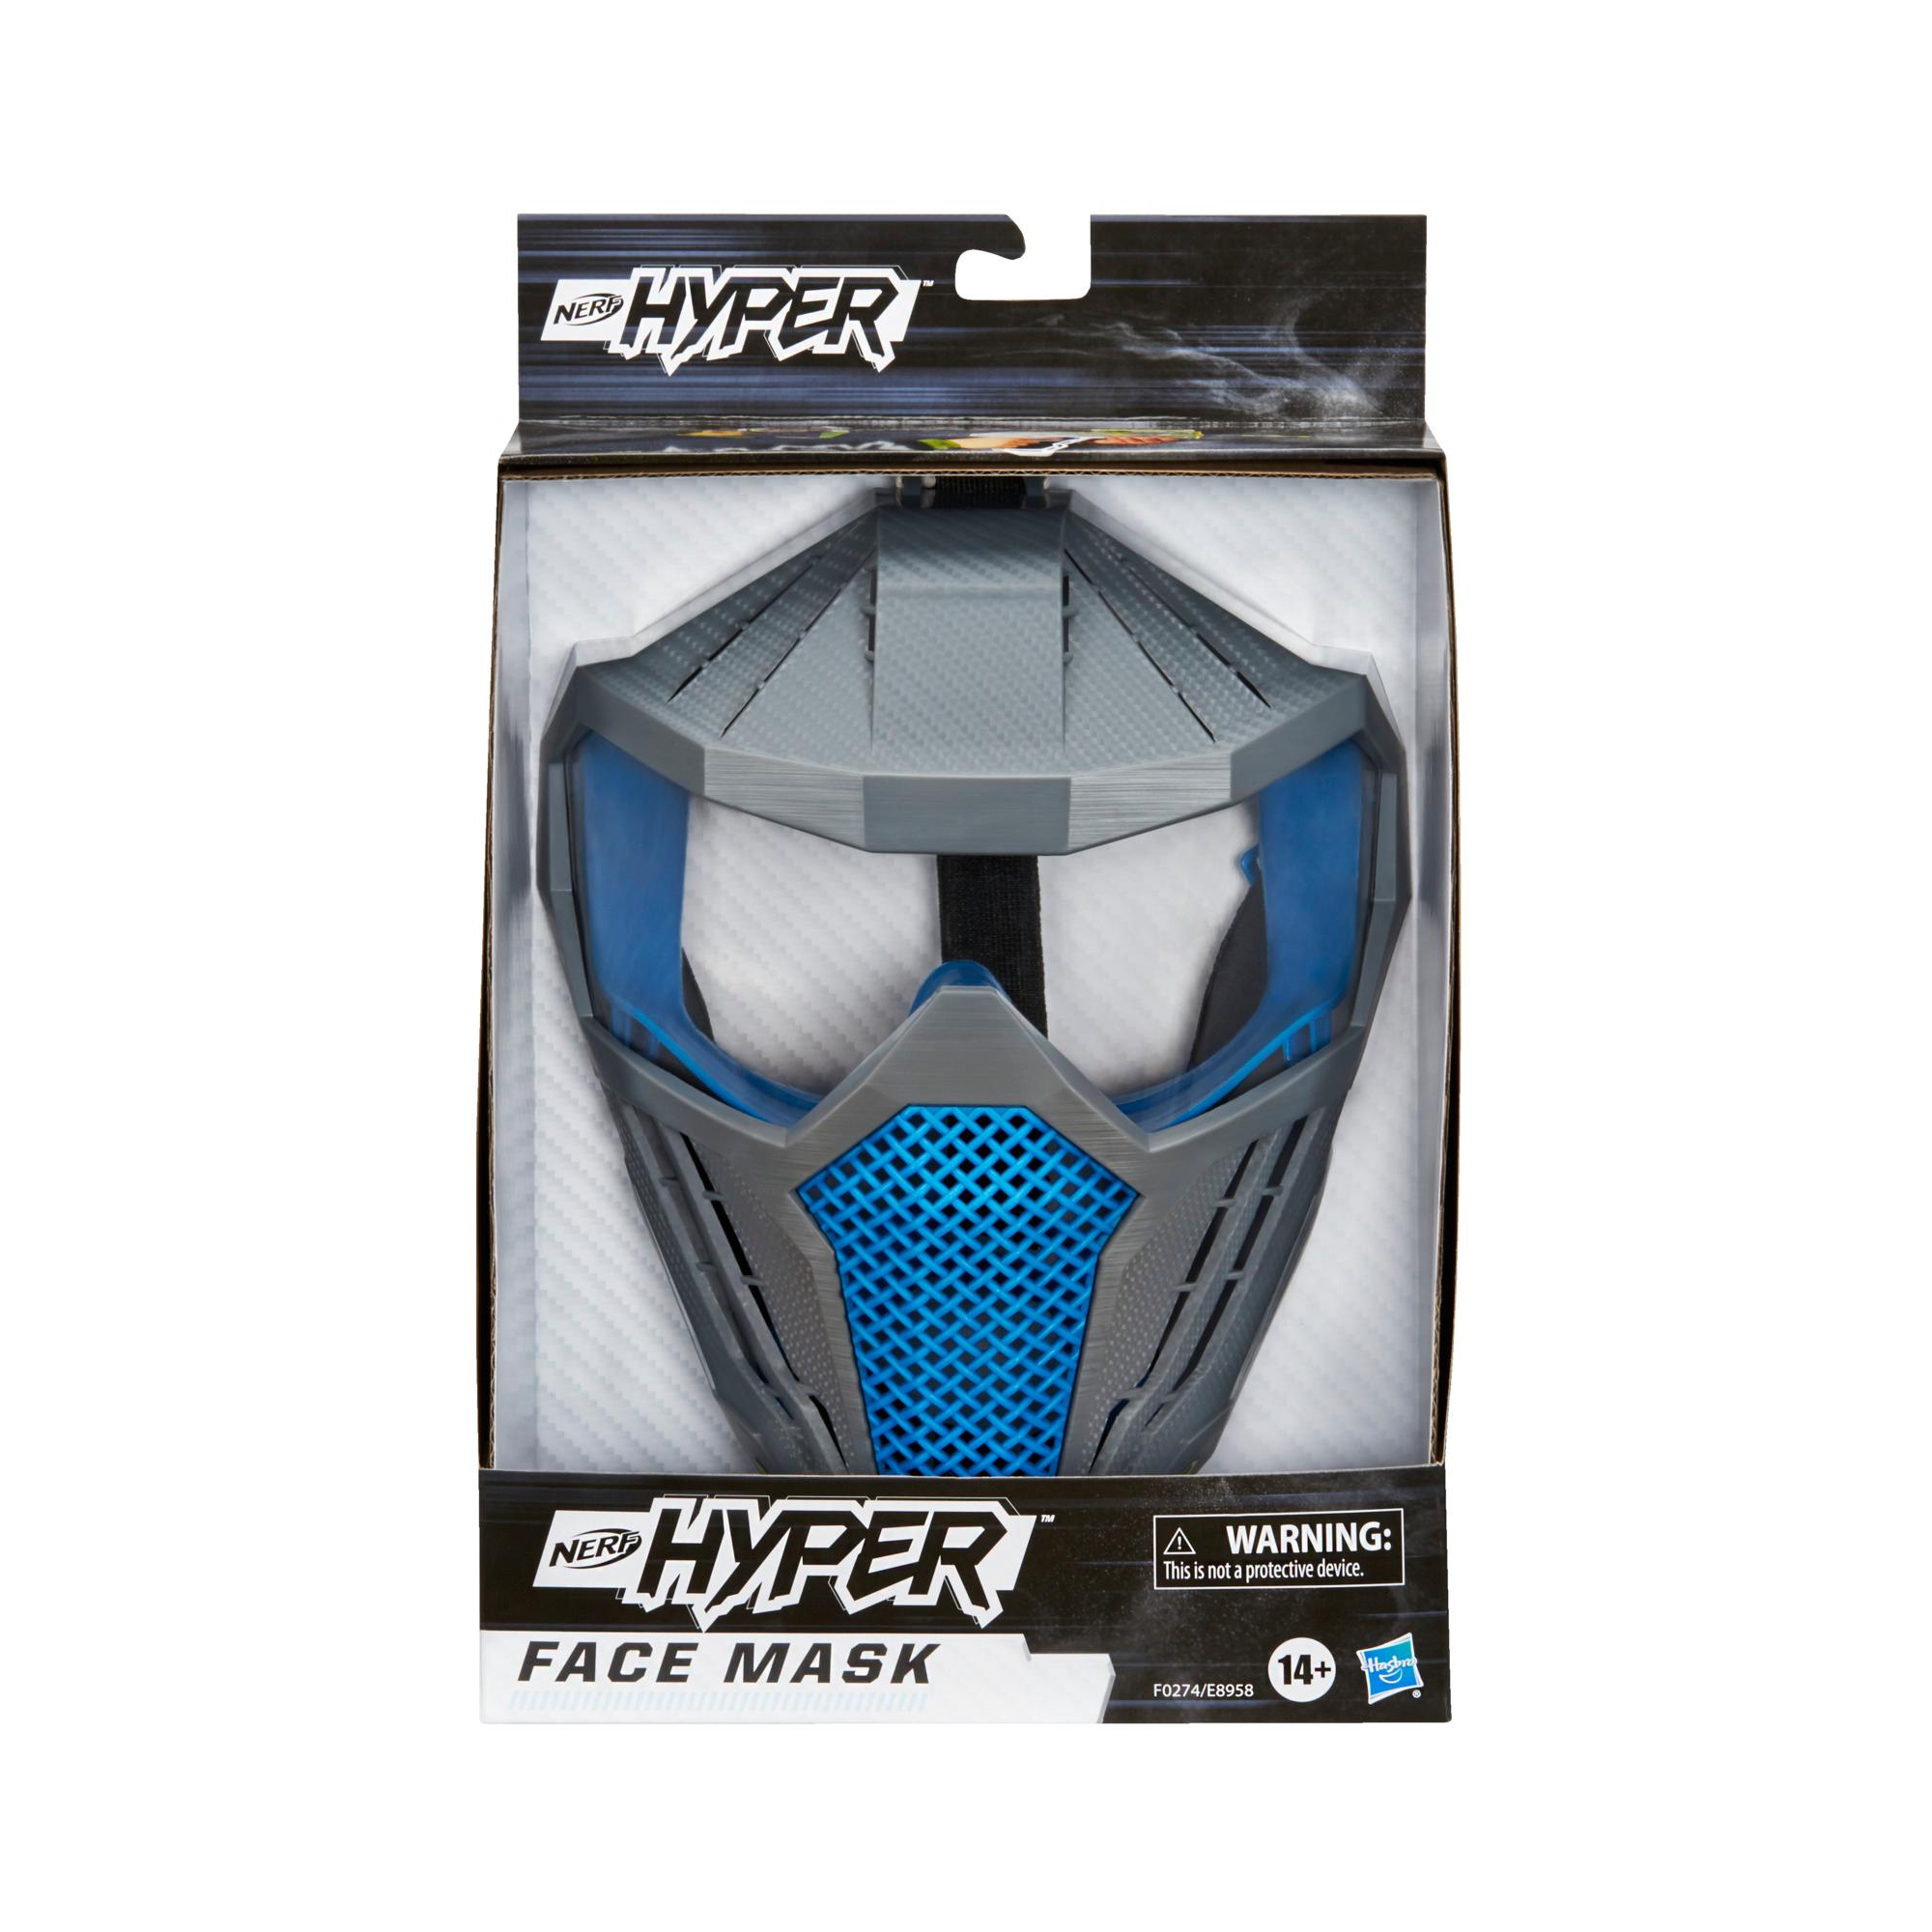 Nerf Hyper Face Mask -- Breathable Design, Adjustable Head Strap -- Blue Team Color -- For Teens, Adults